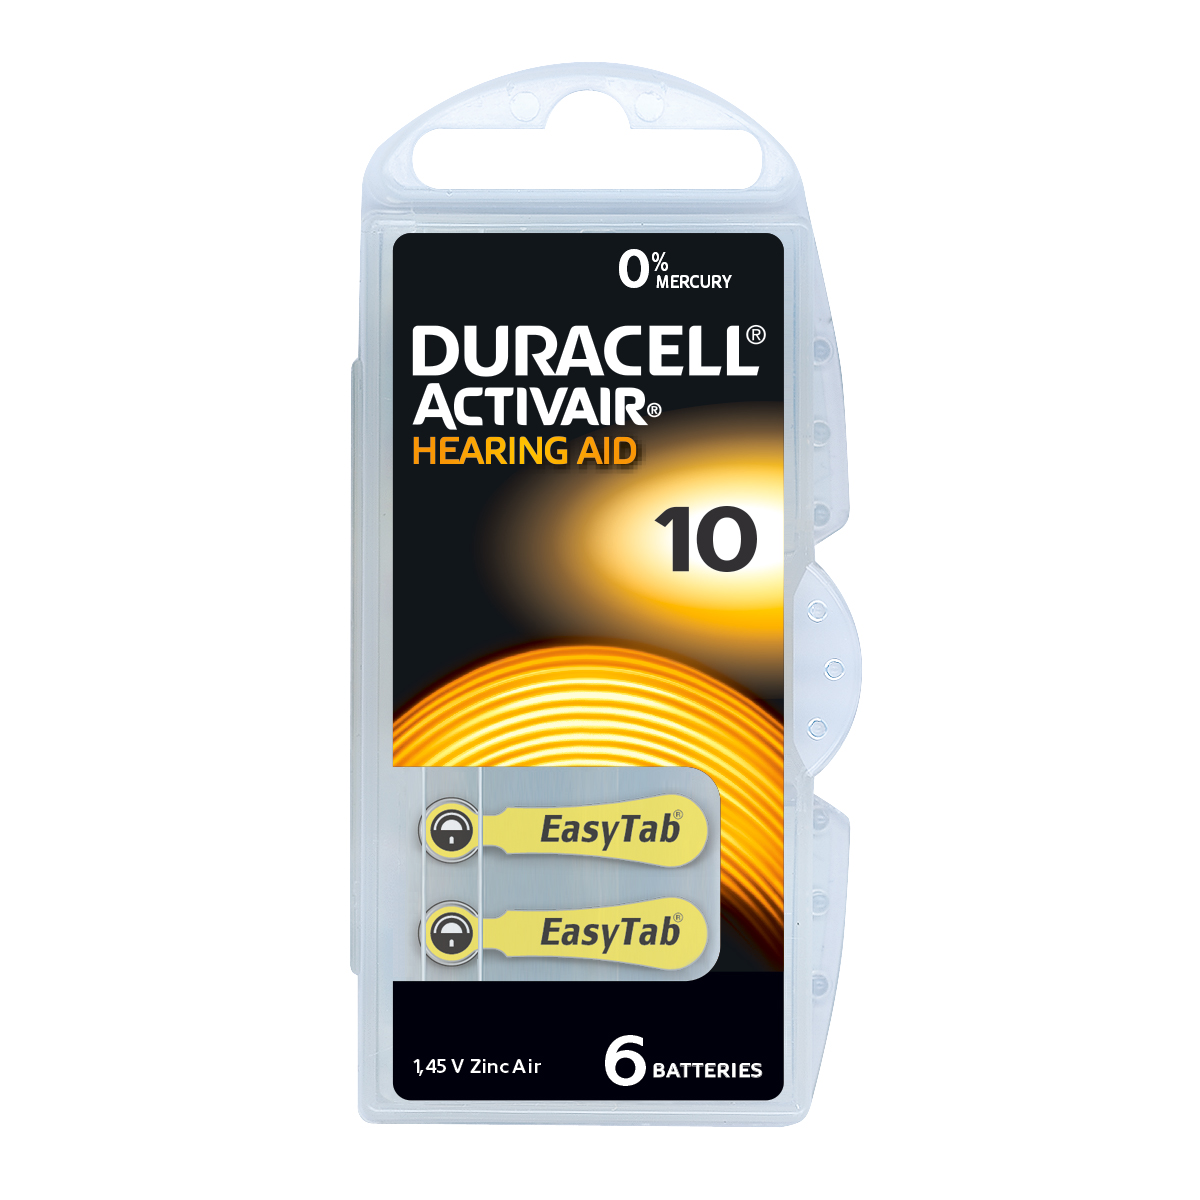 Duracell Activair Pack 6 Hearing aid batteries Zinc Air No. 10, blister